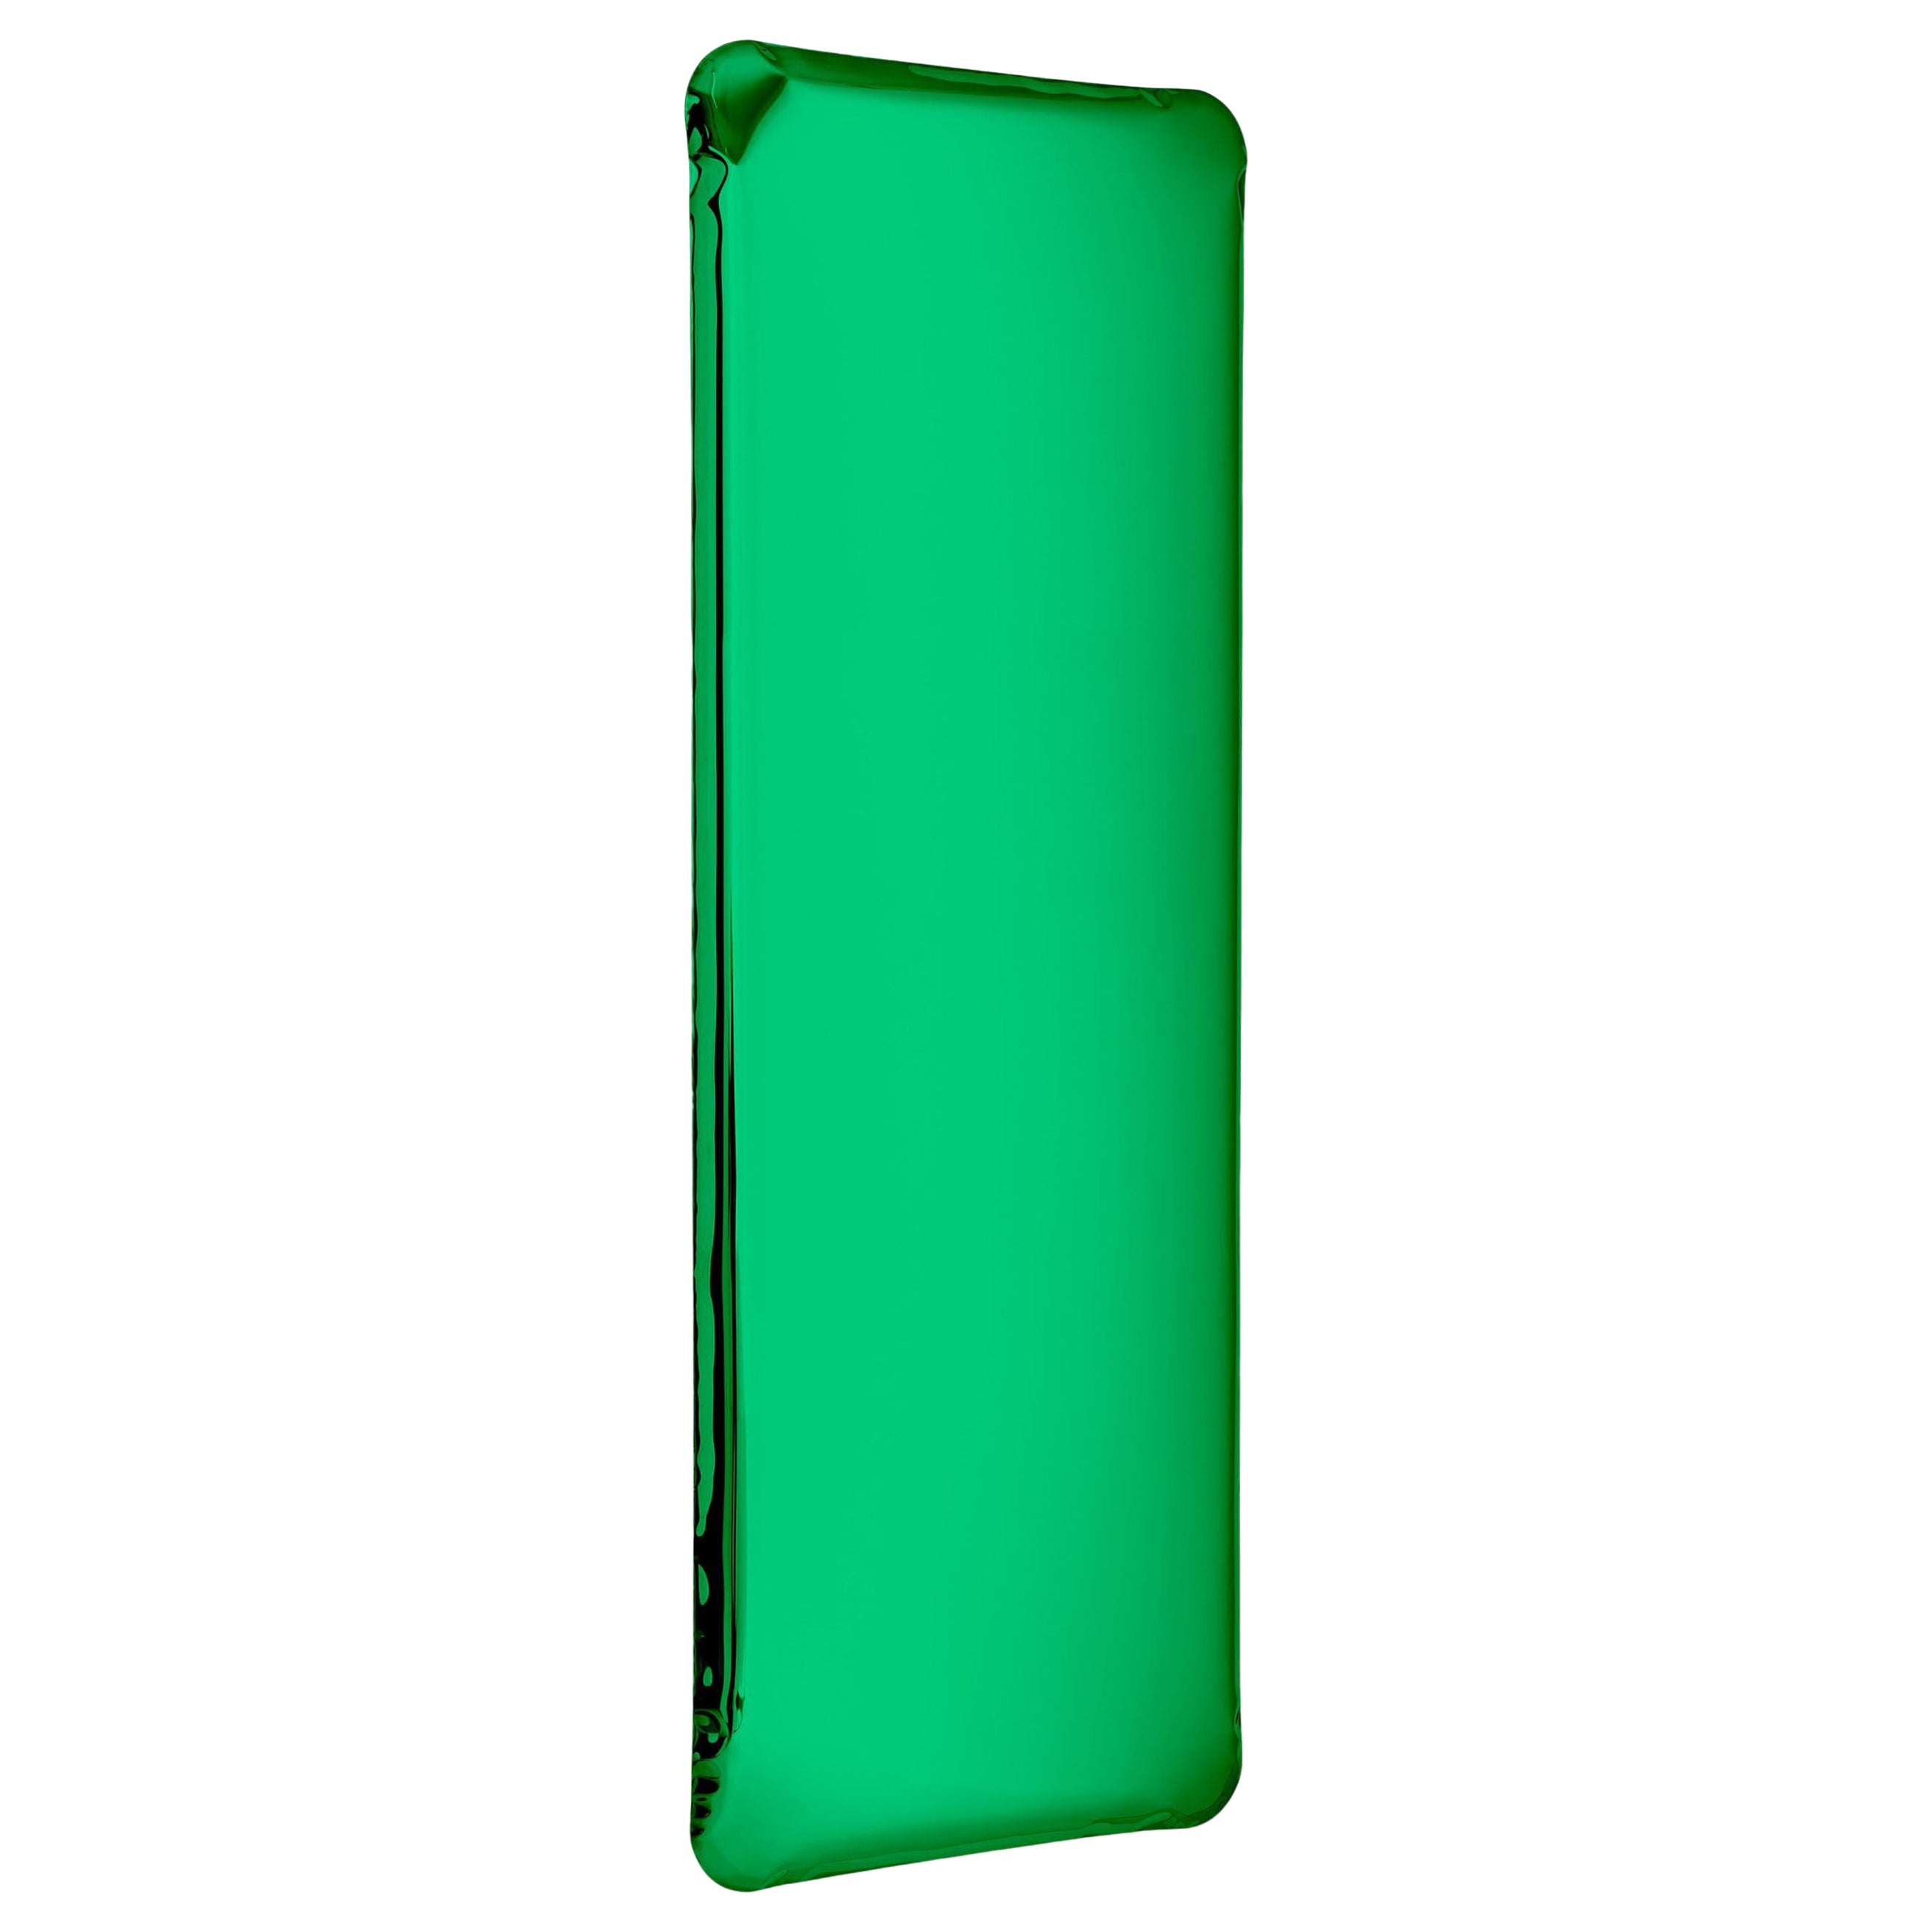 Emerald Tafla Q1 Sculptural Wall Mirror by Zieta For Sale